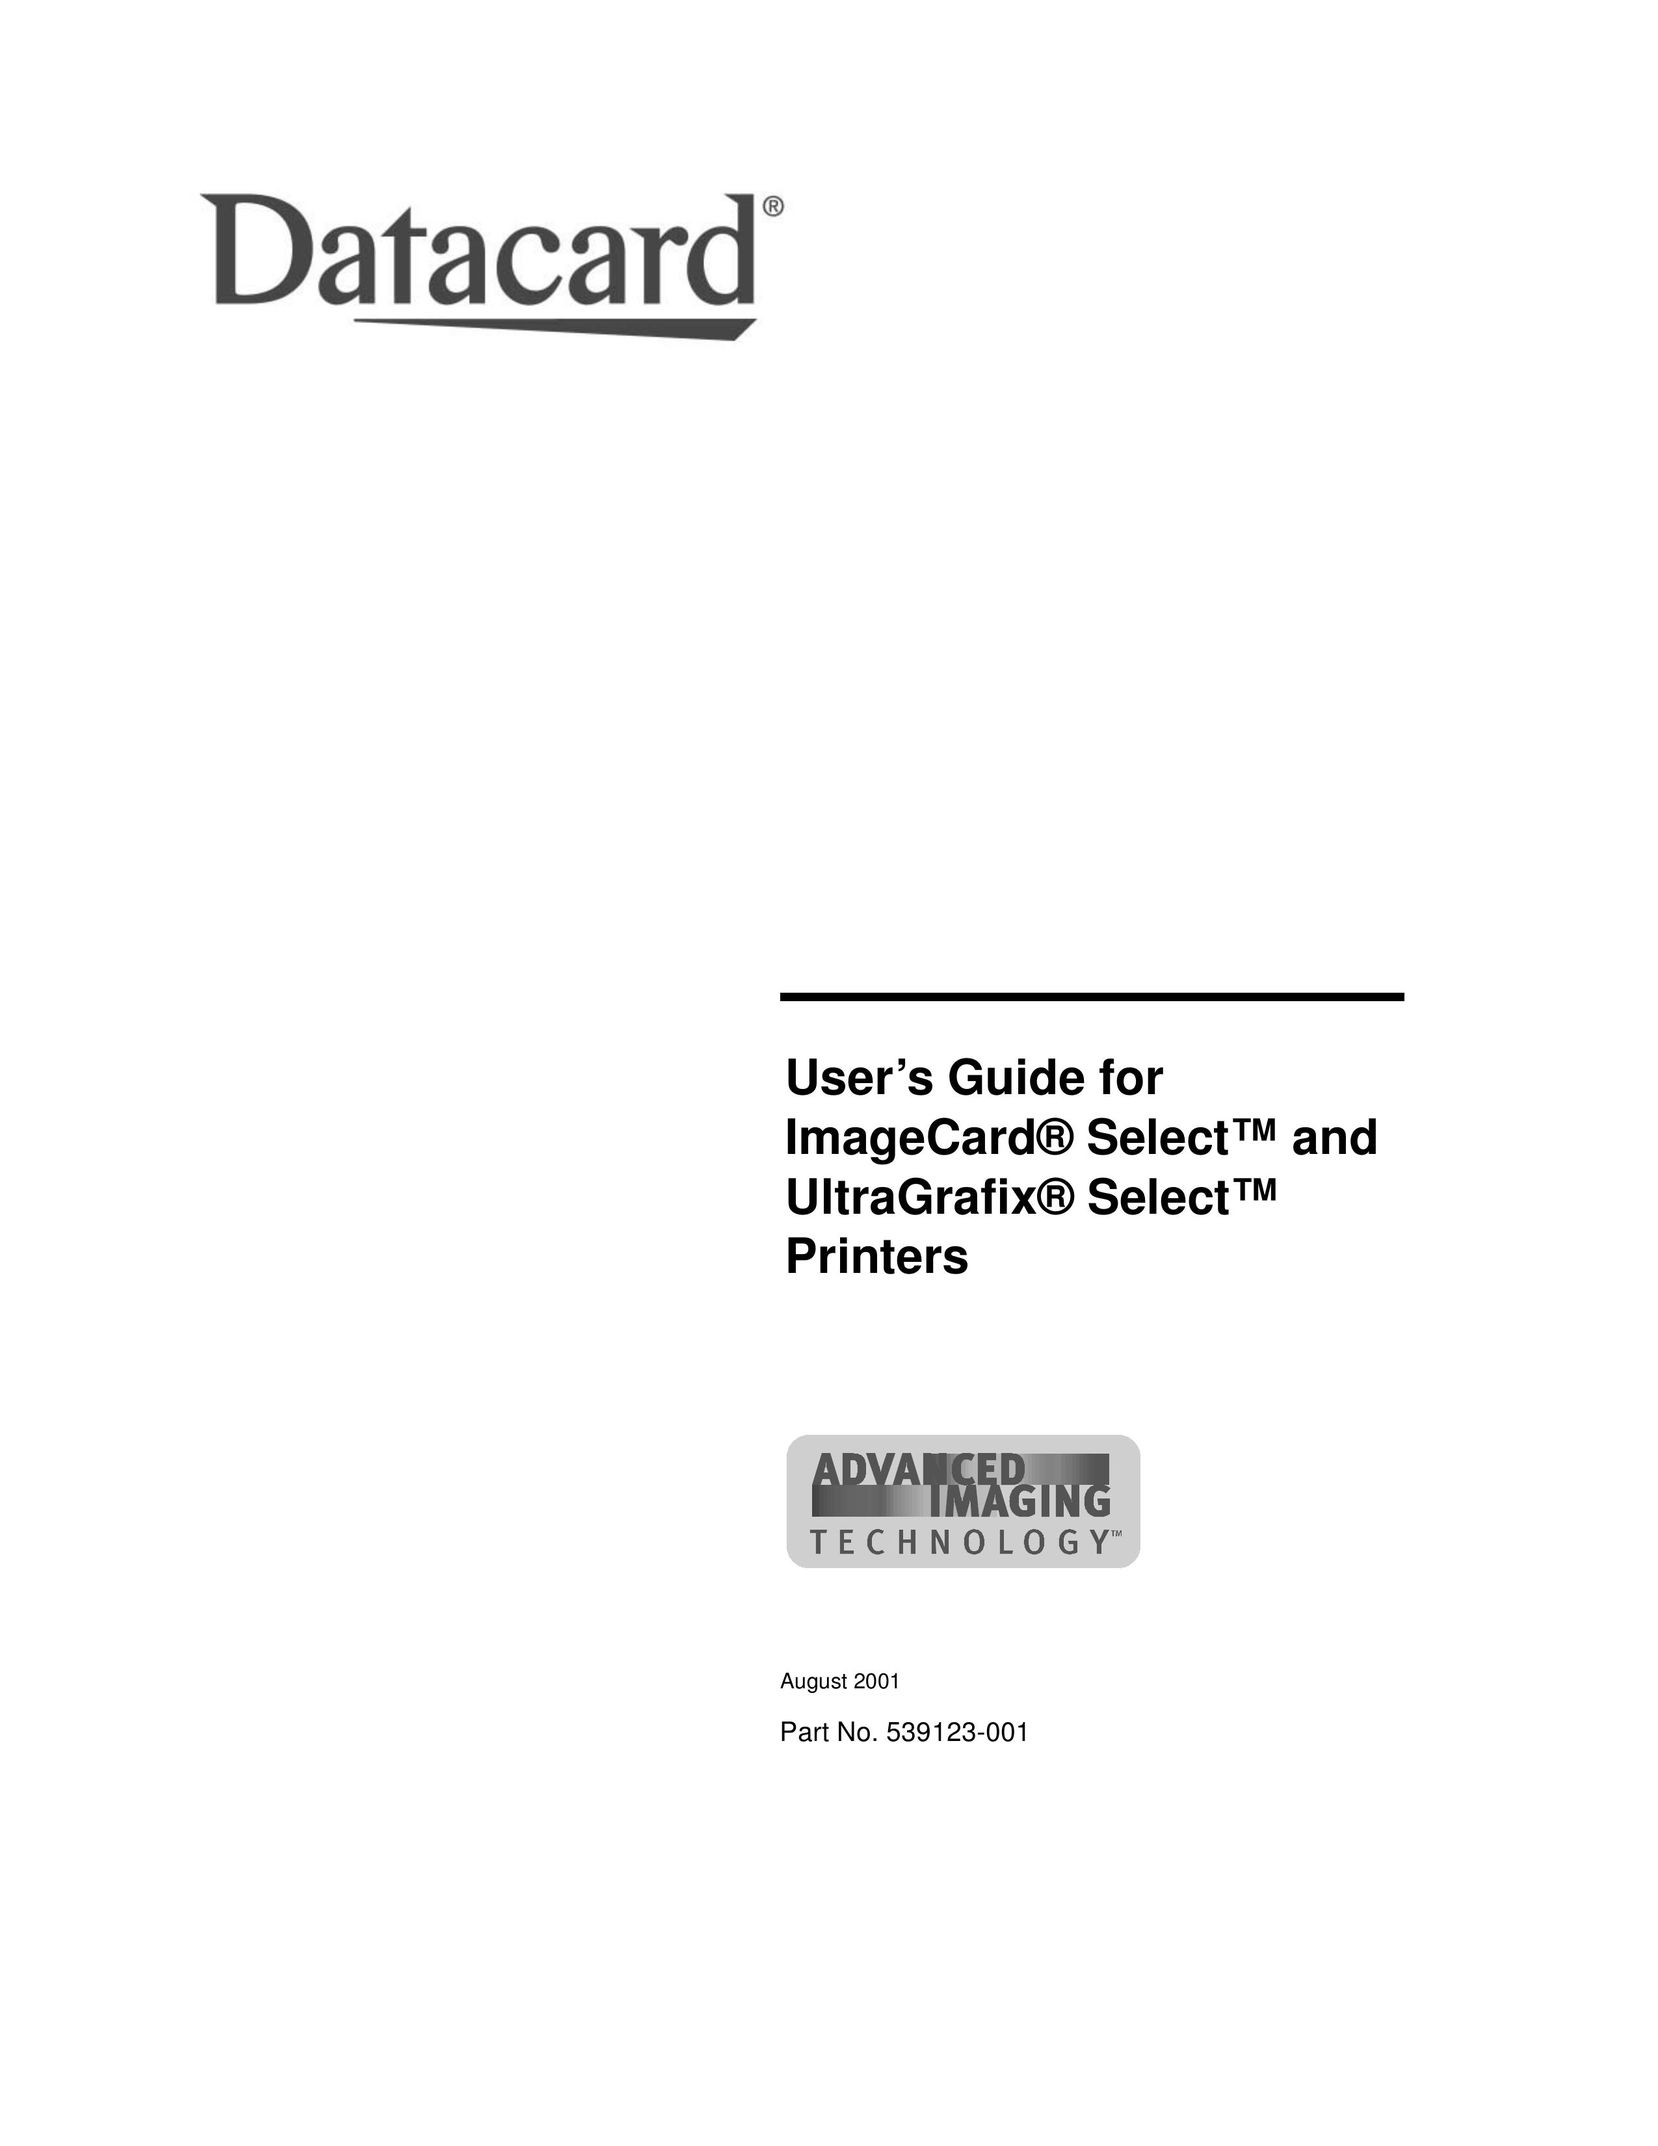 Datacard Group ImageCard SelectTM and UltraGrafix SelectTM Printers Printer User Manual